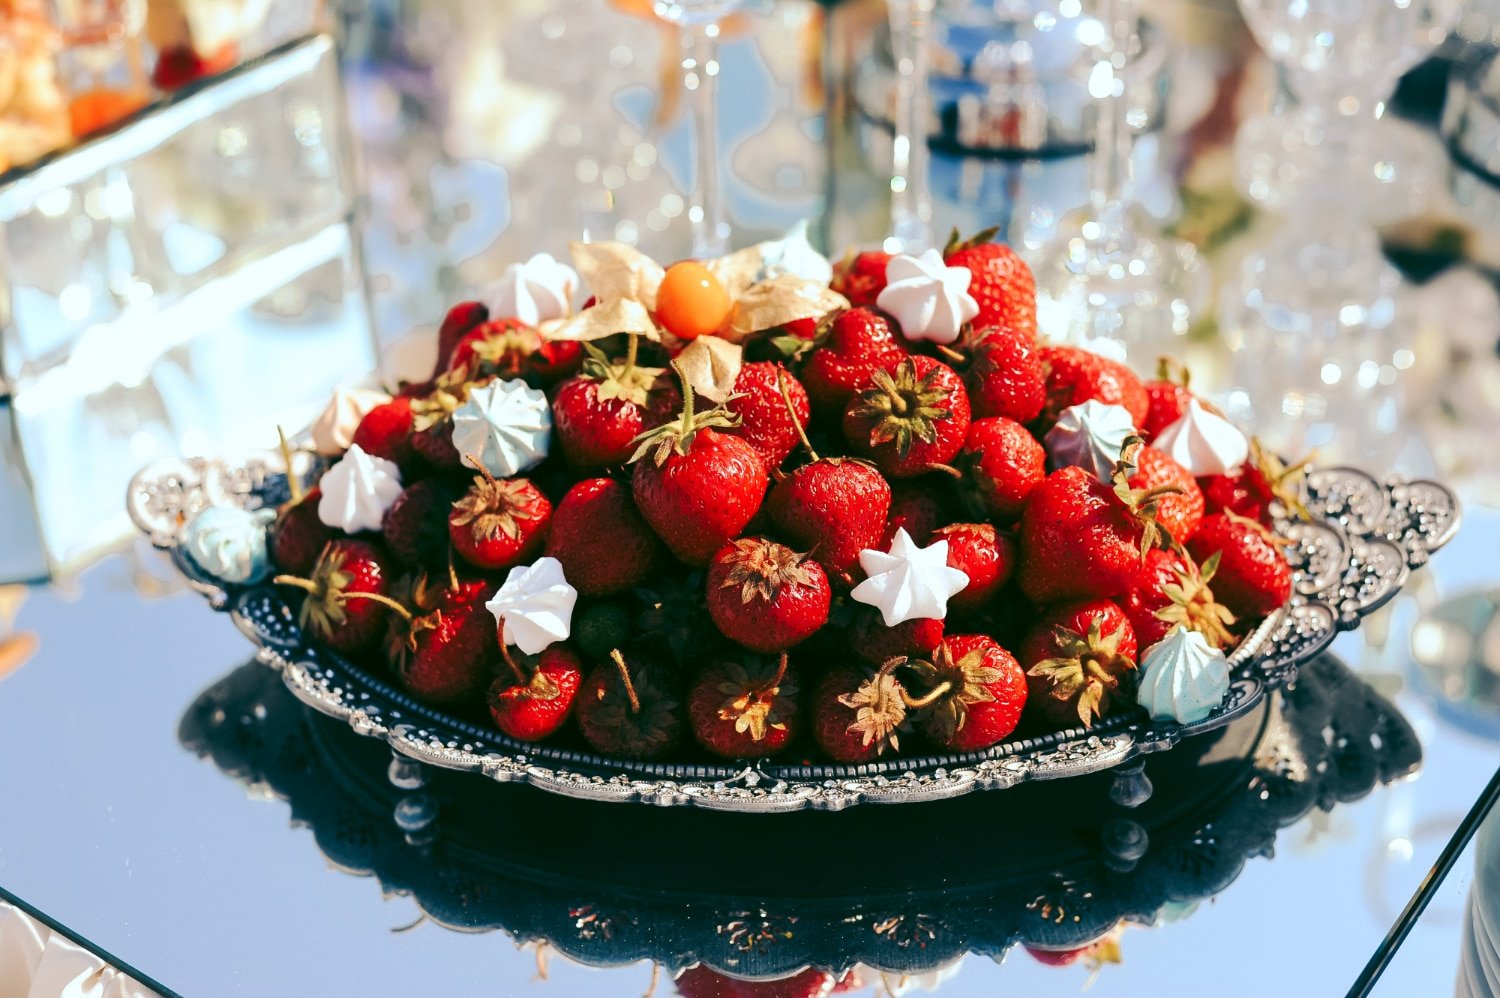 Shari’s Berries Gourmet Dipped Strawberries and Treats